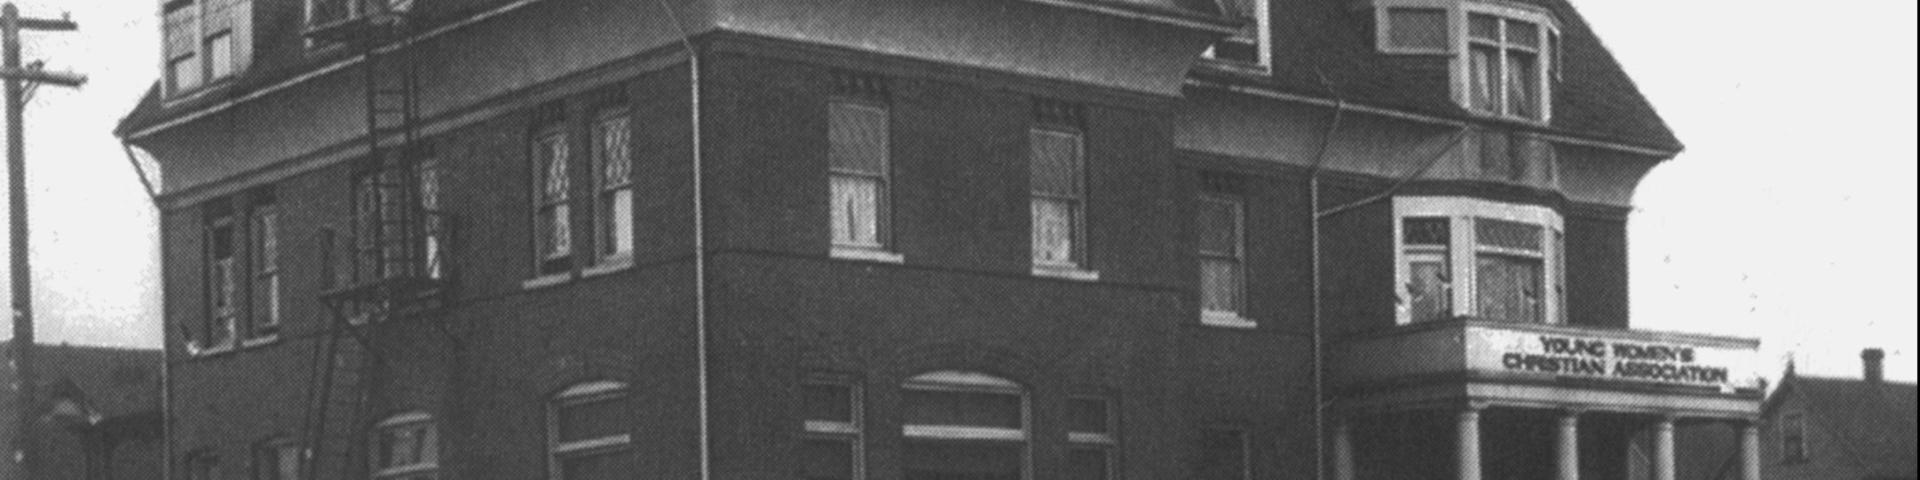 YWCA building in 1912